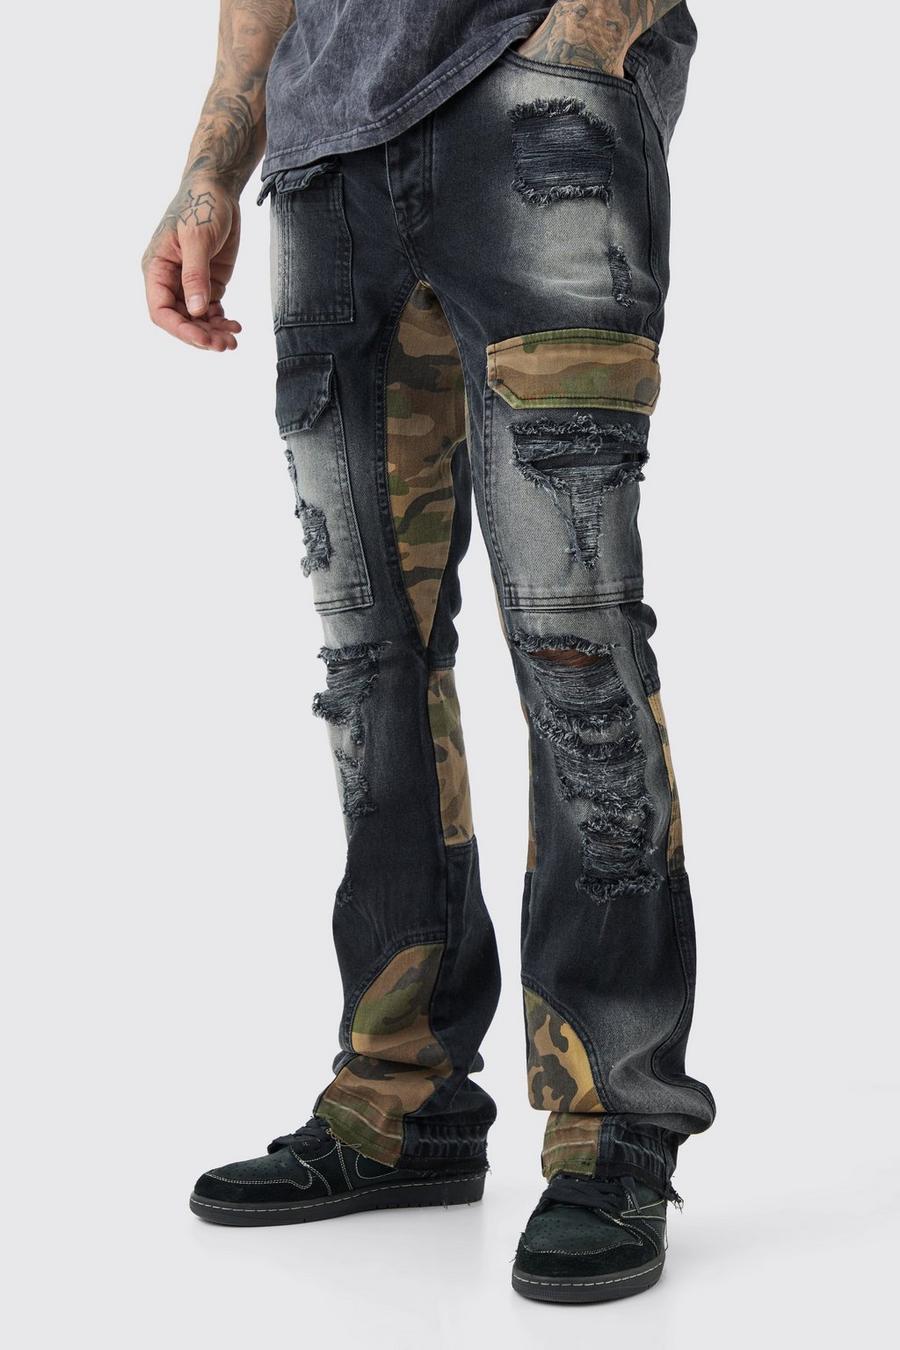 Jeans Cargo Tall Slim Fit in denim rigido in fantasia militare con rattoppi, Washed black image number 1